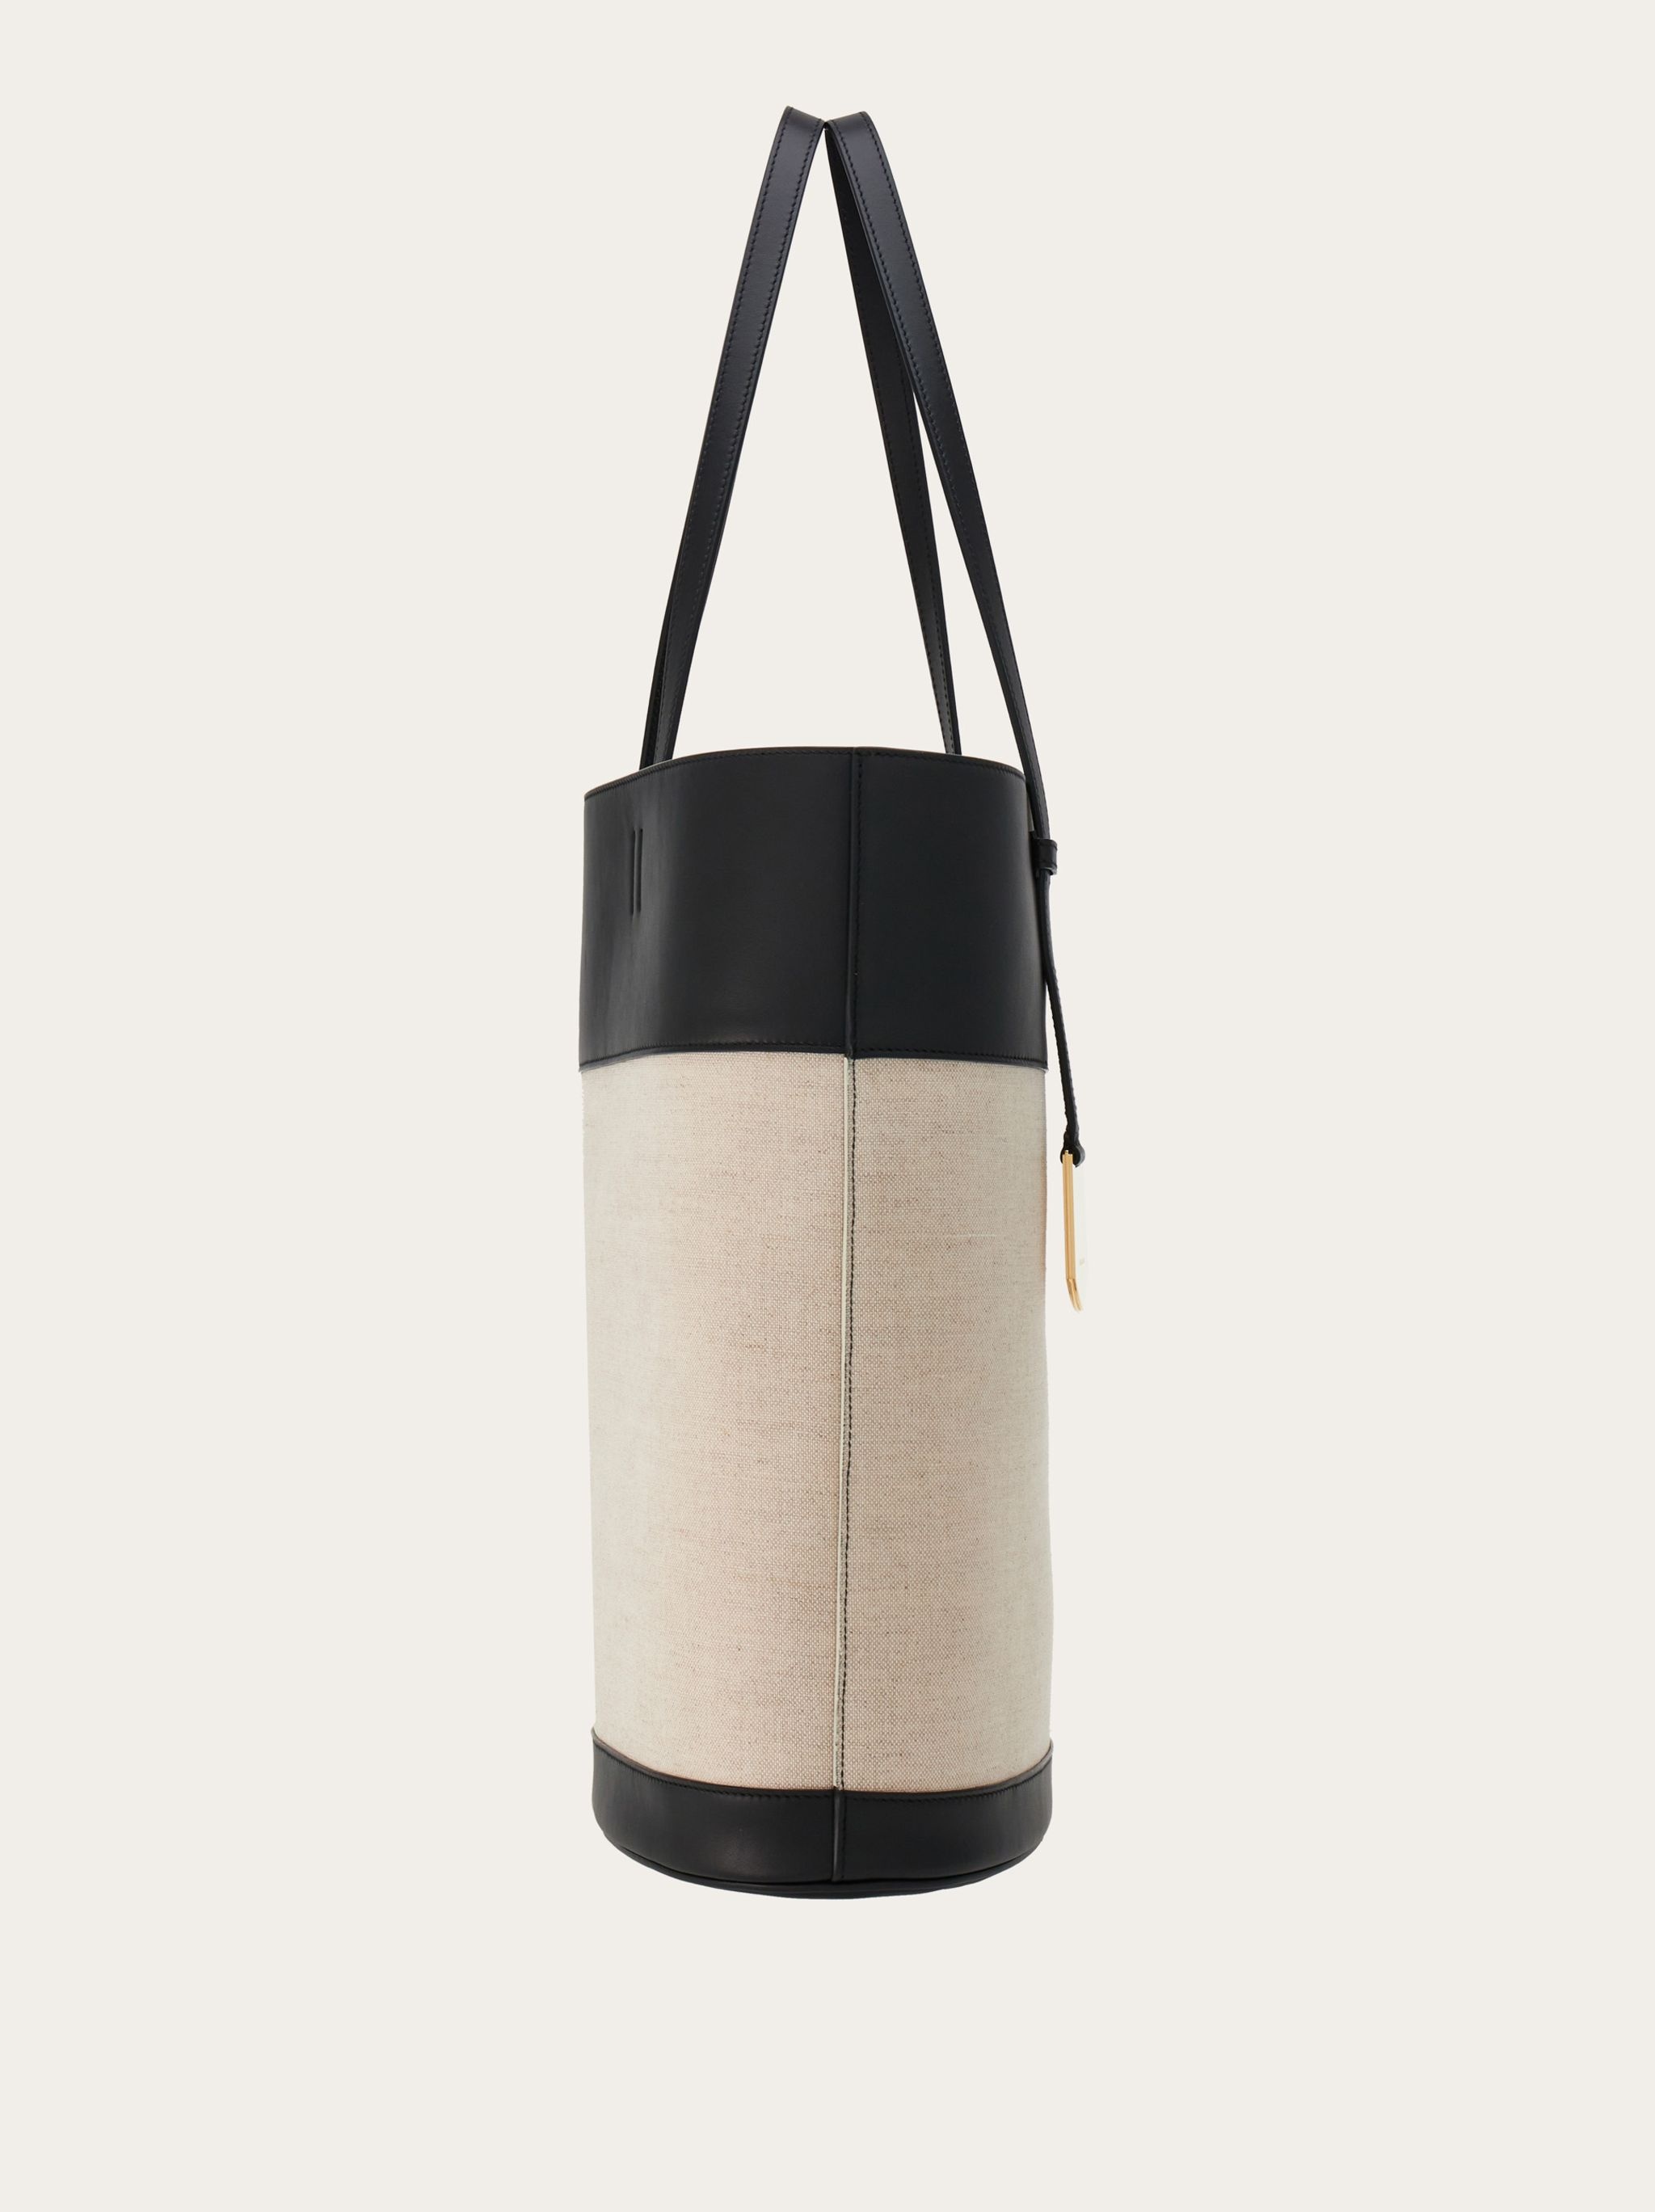 North-South charming tote bag (M) - 3